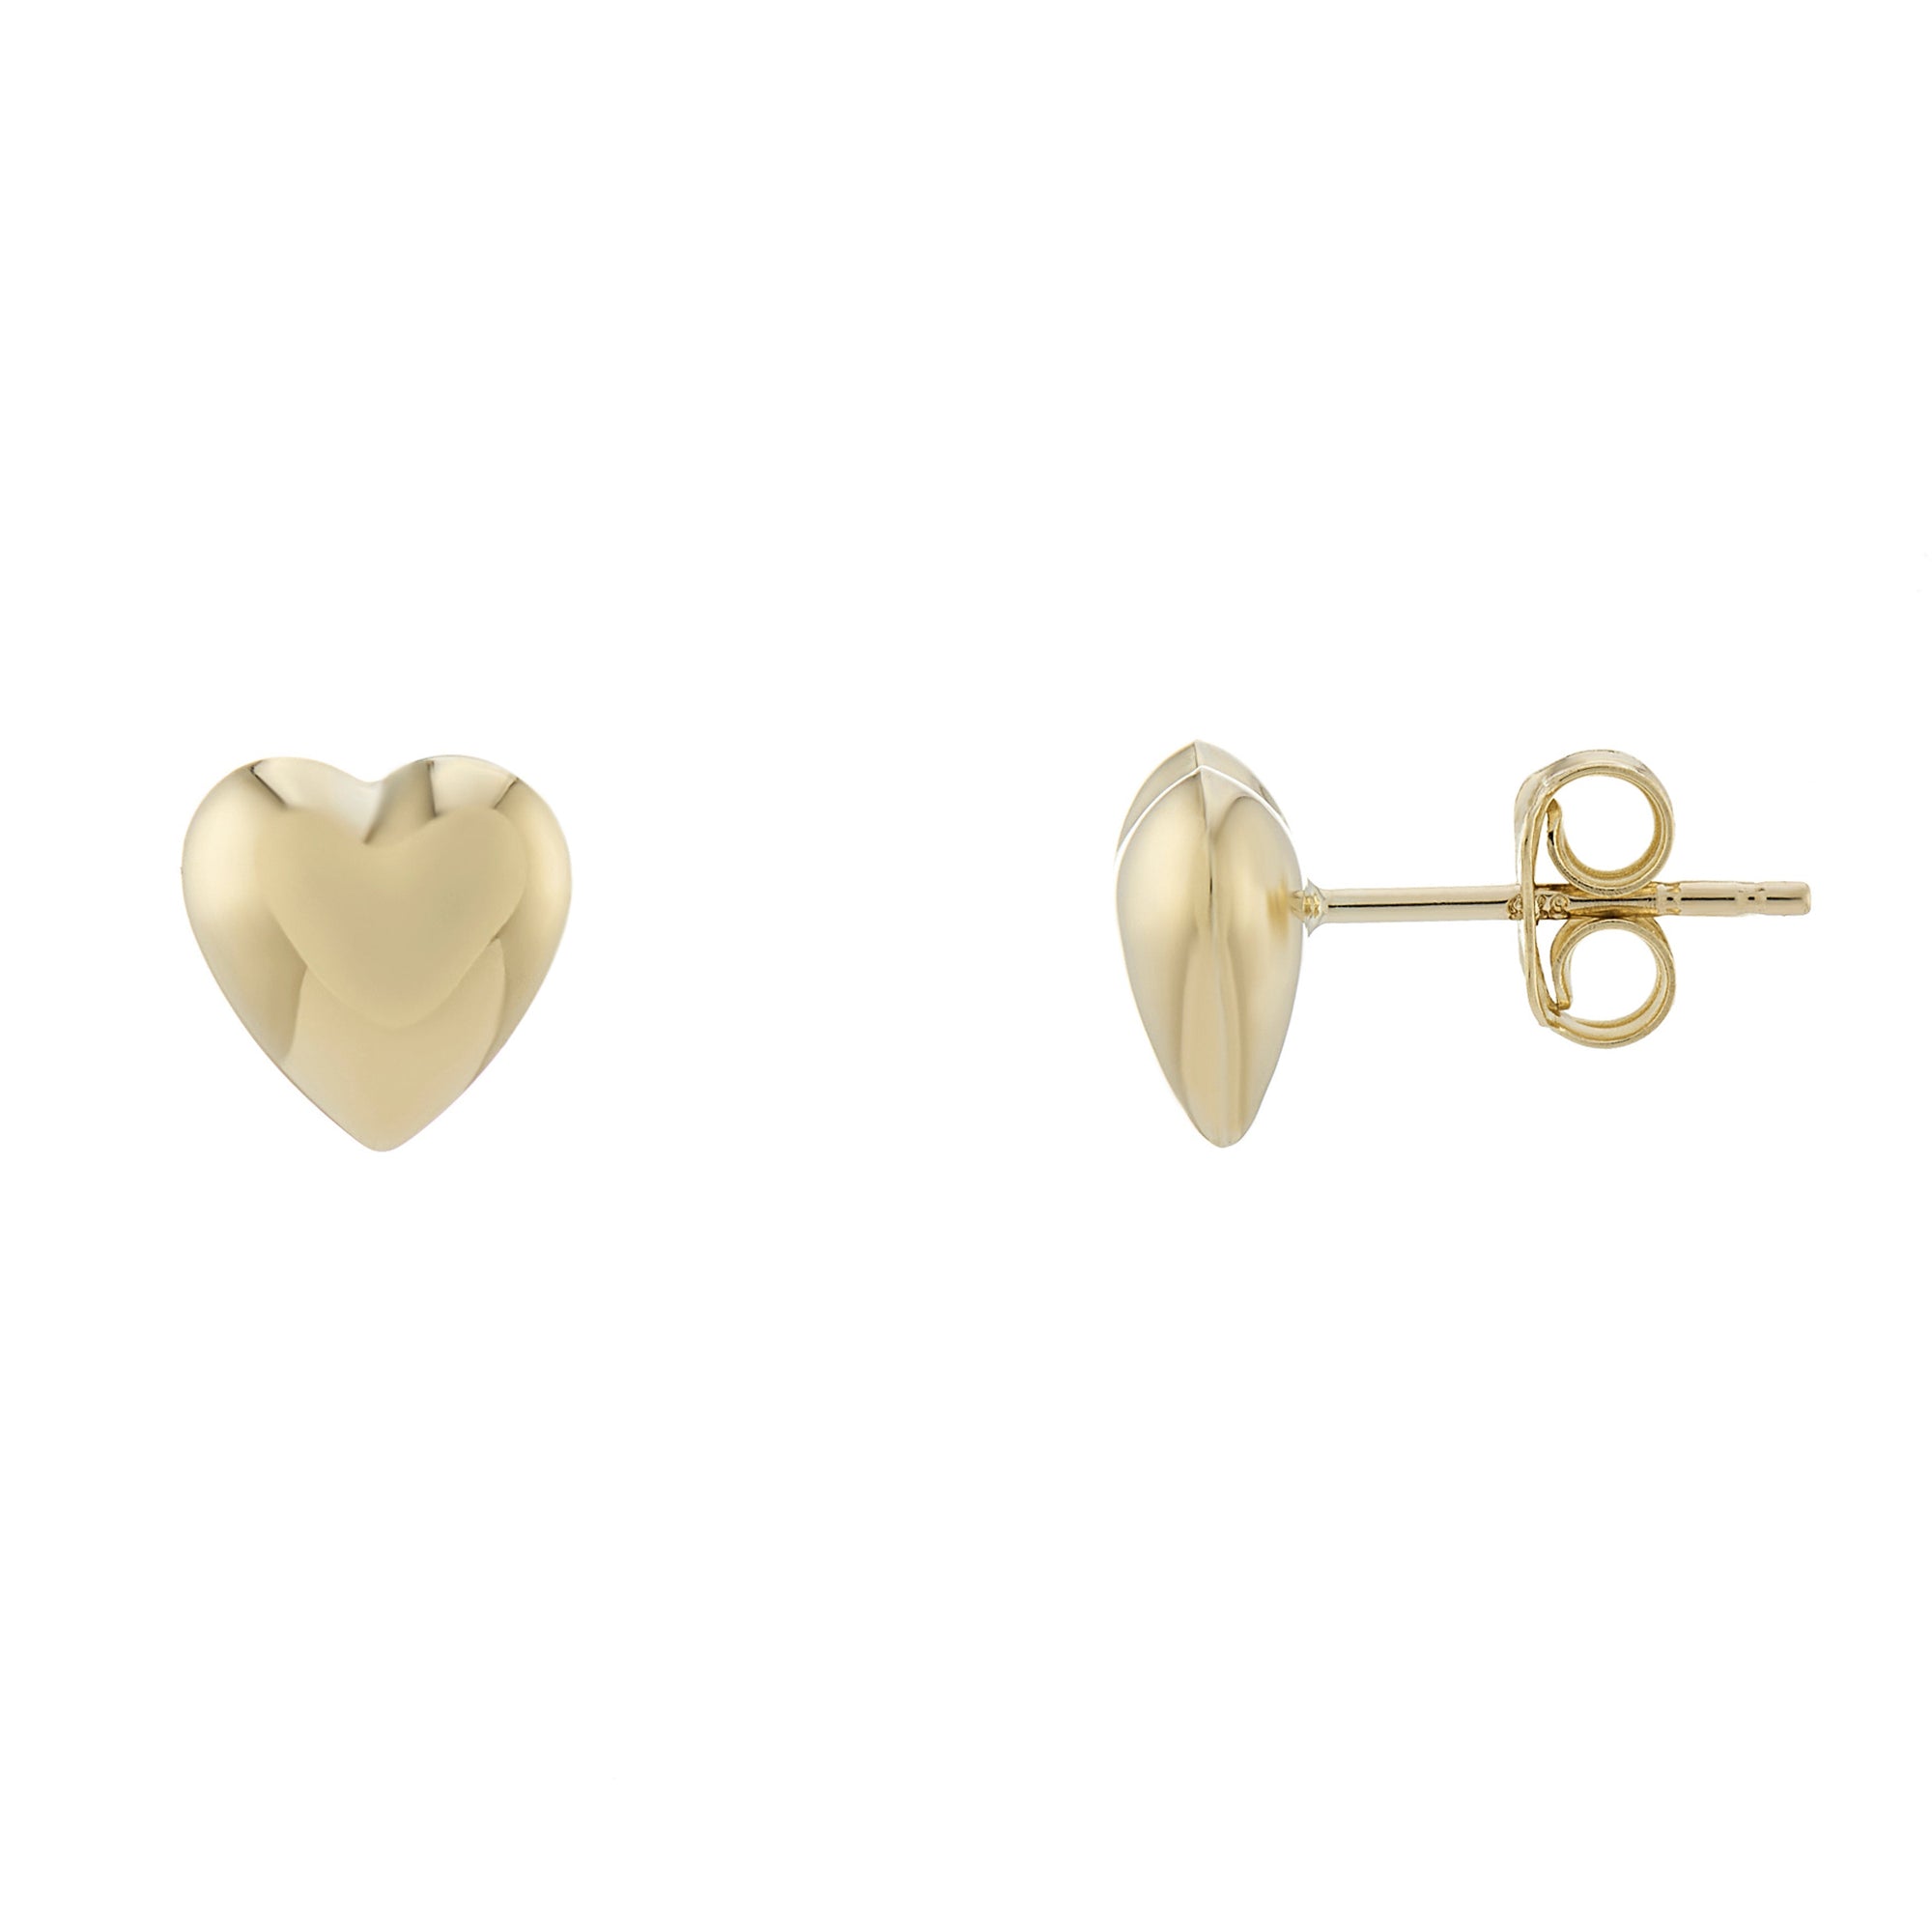 9ct gold 9mm plain heart stud earrings